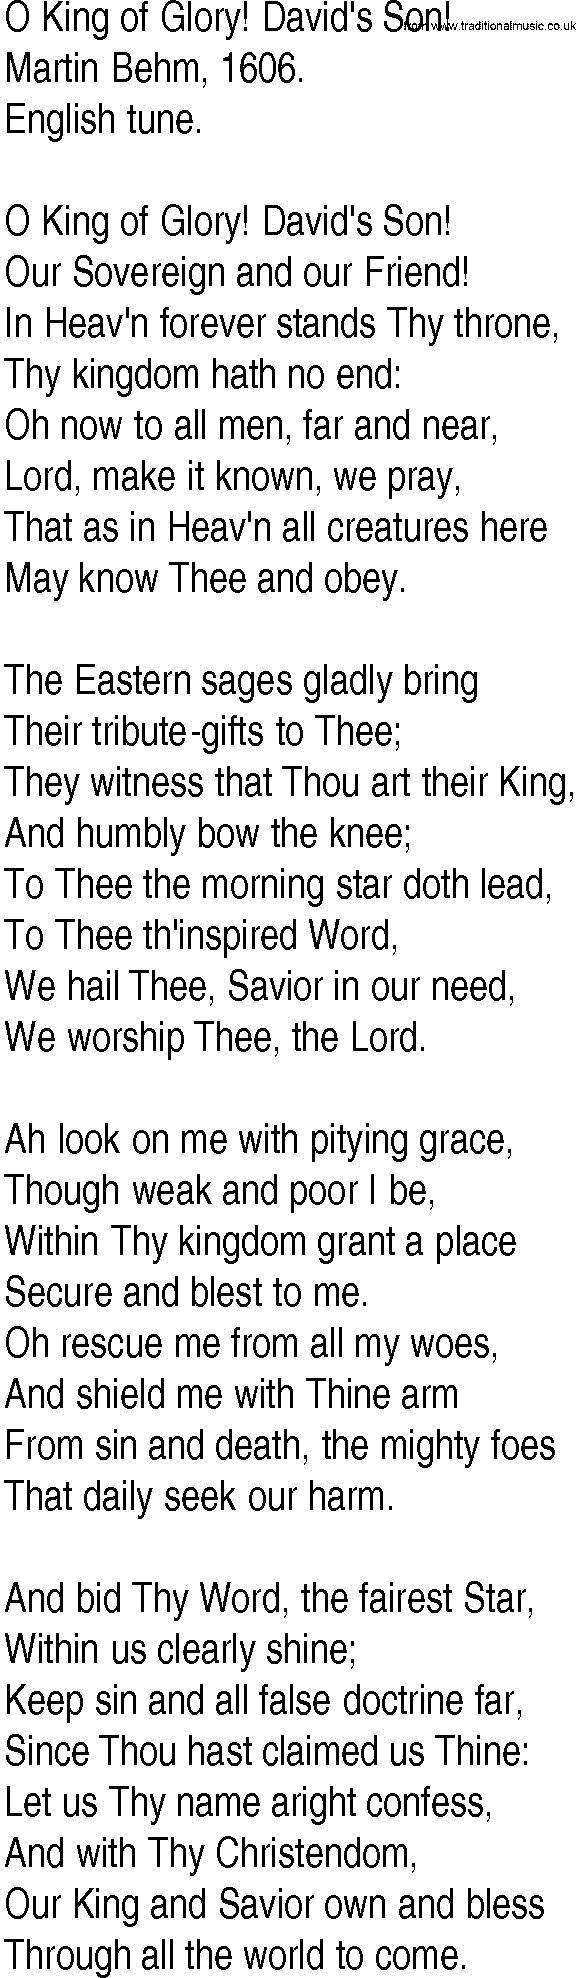 Hymn and Gospel Song: O King of Glory! David's Son! by Martin Behm lyrics